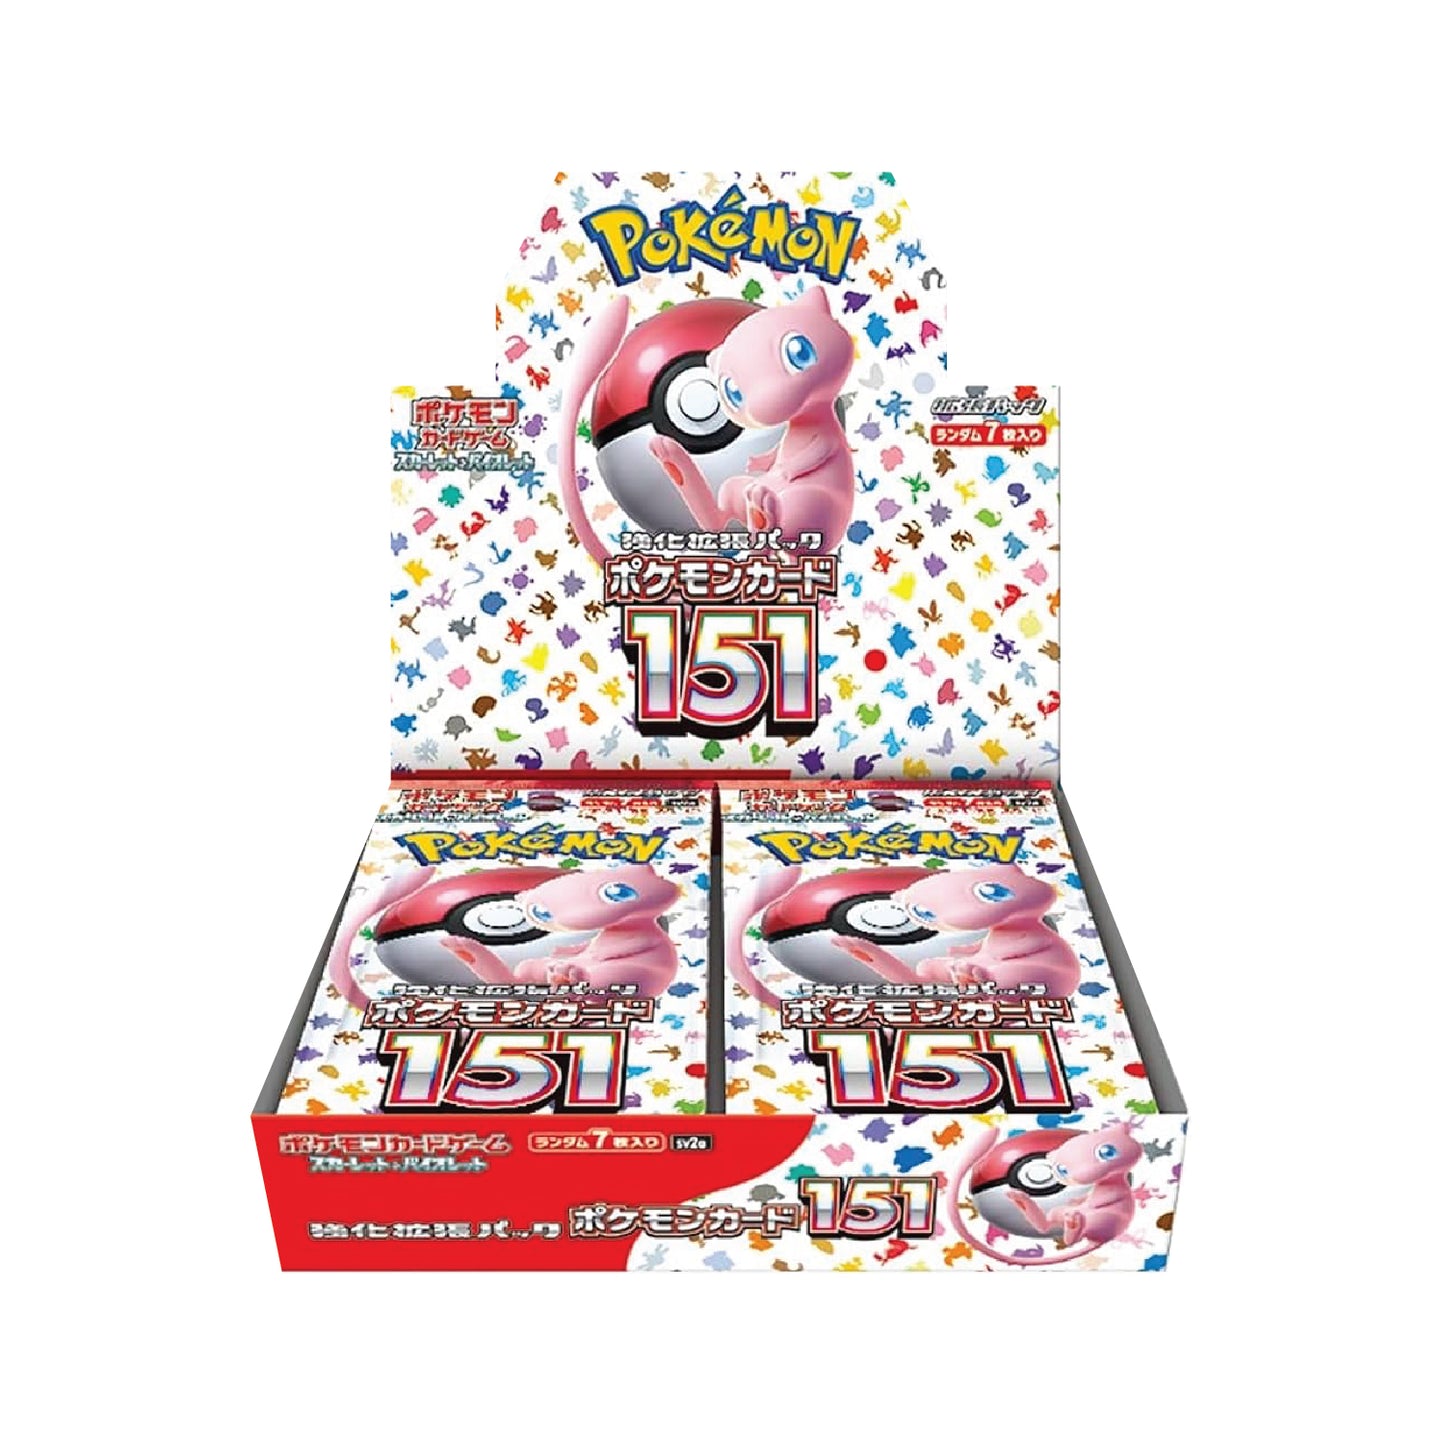 Pokémon TCG | Japanese Expansion: Pokémon 151 - Booster Box (20 Booster Packs)